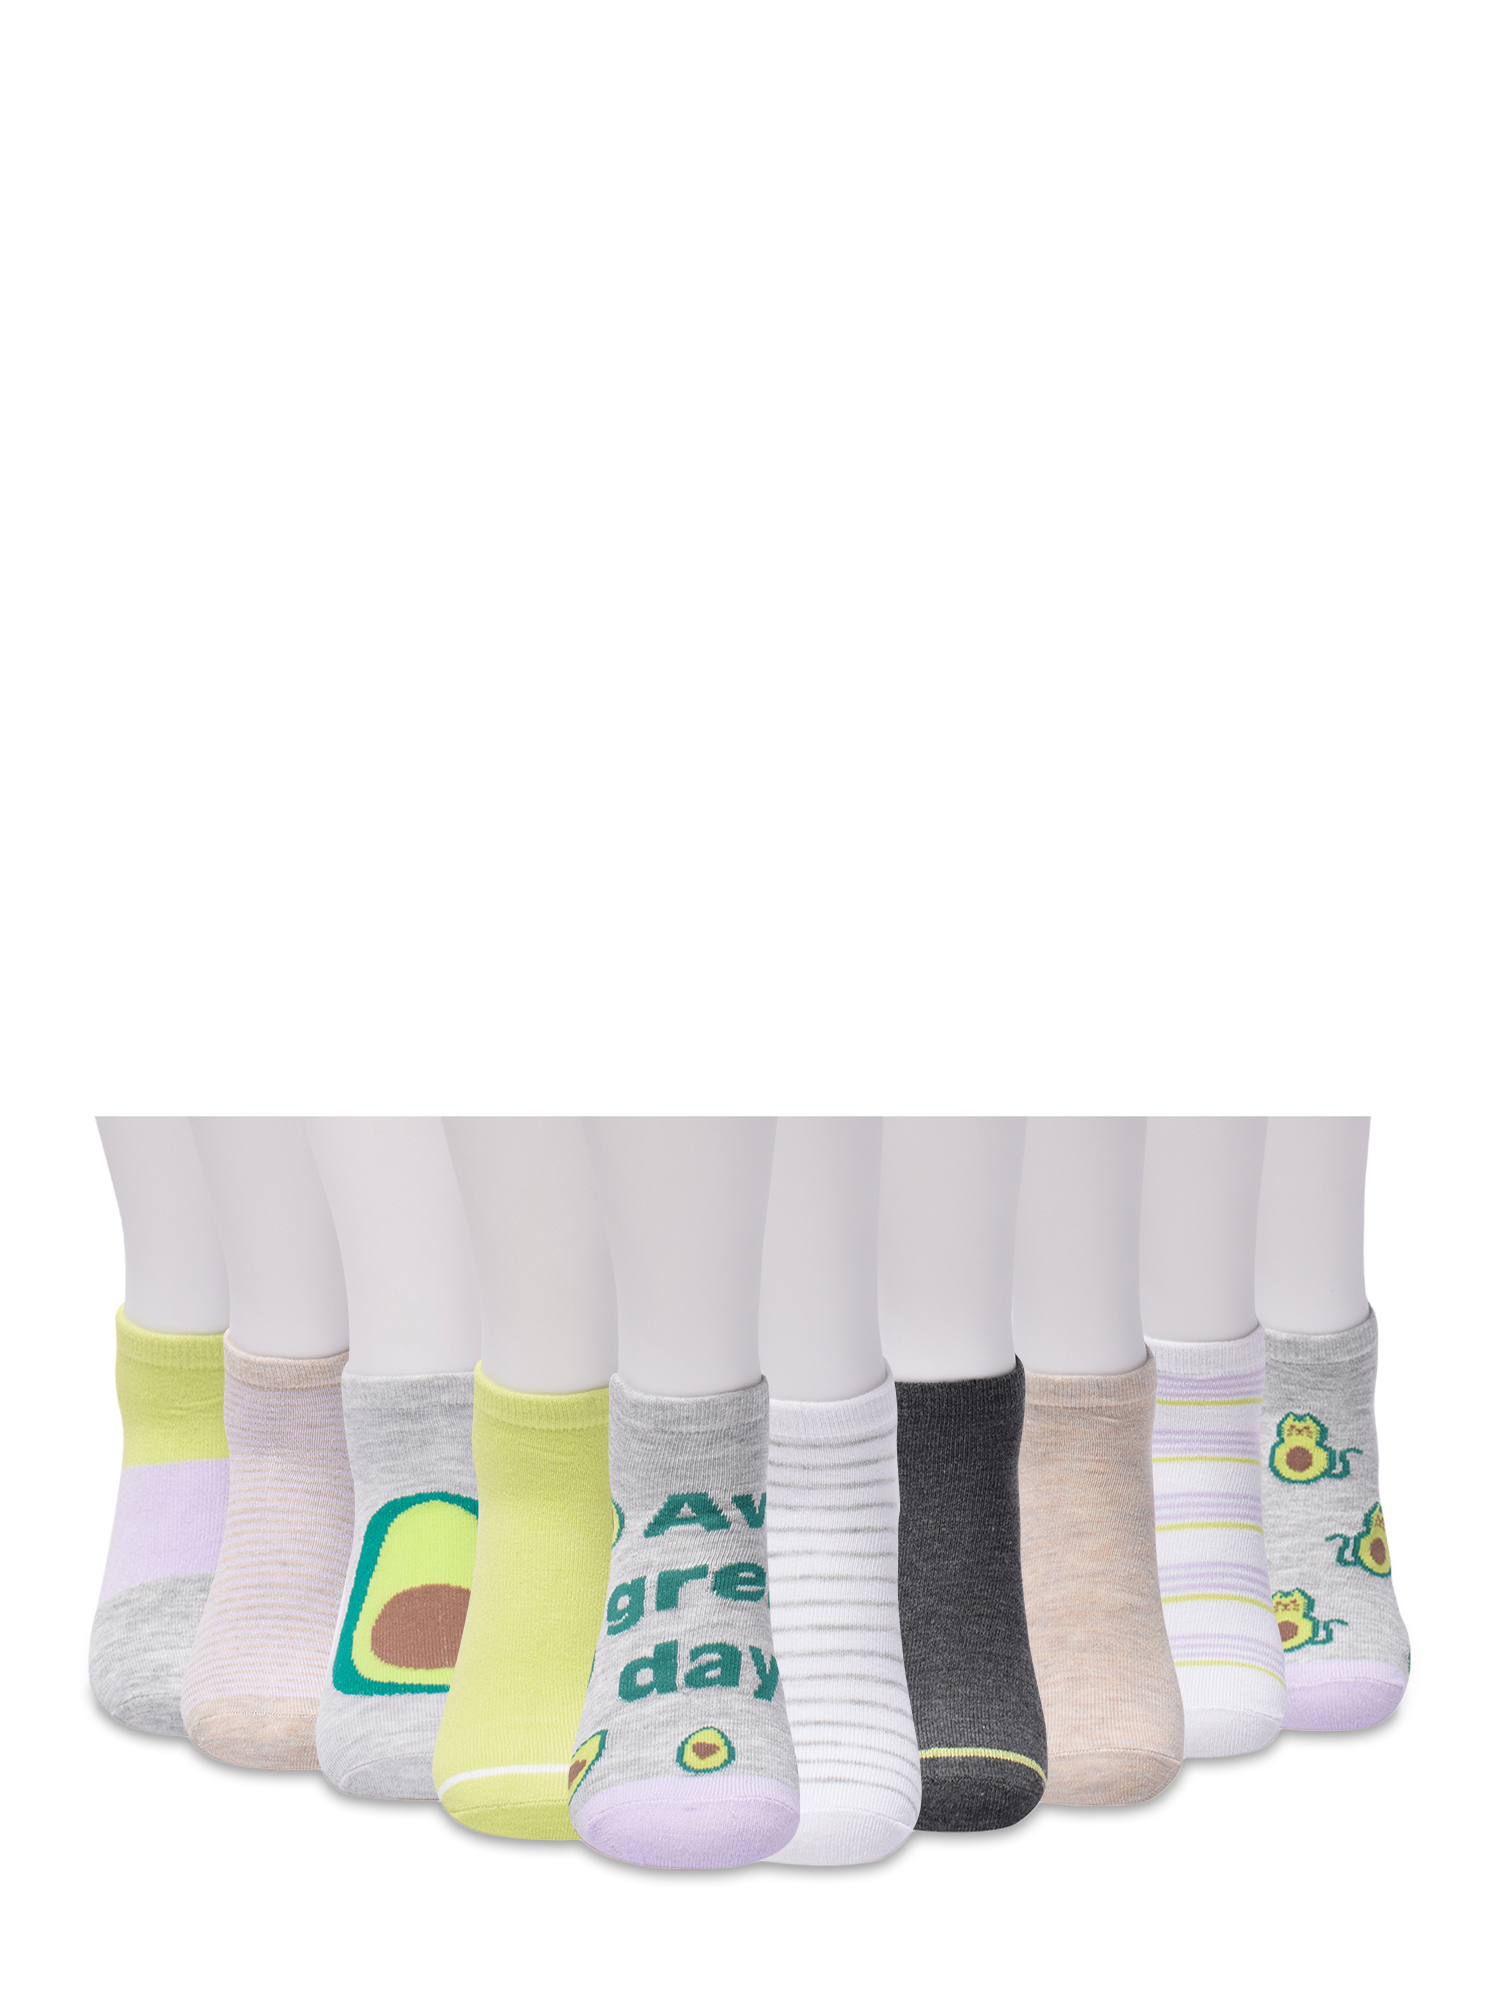 No Boundaries Women's Low-Cut Socks, 10-Pack, Sizes 4-10 - image 5 of 5